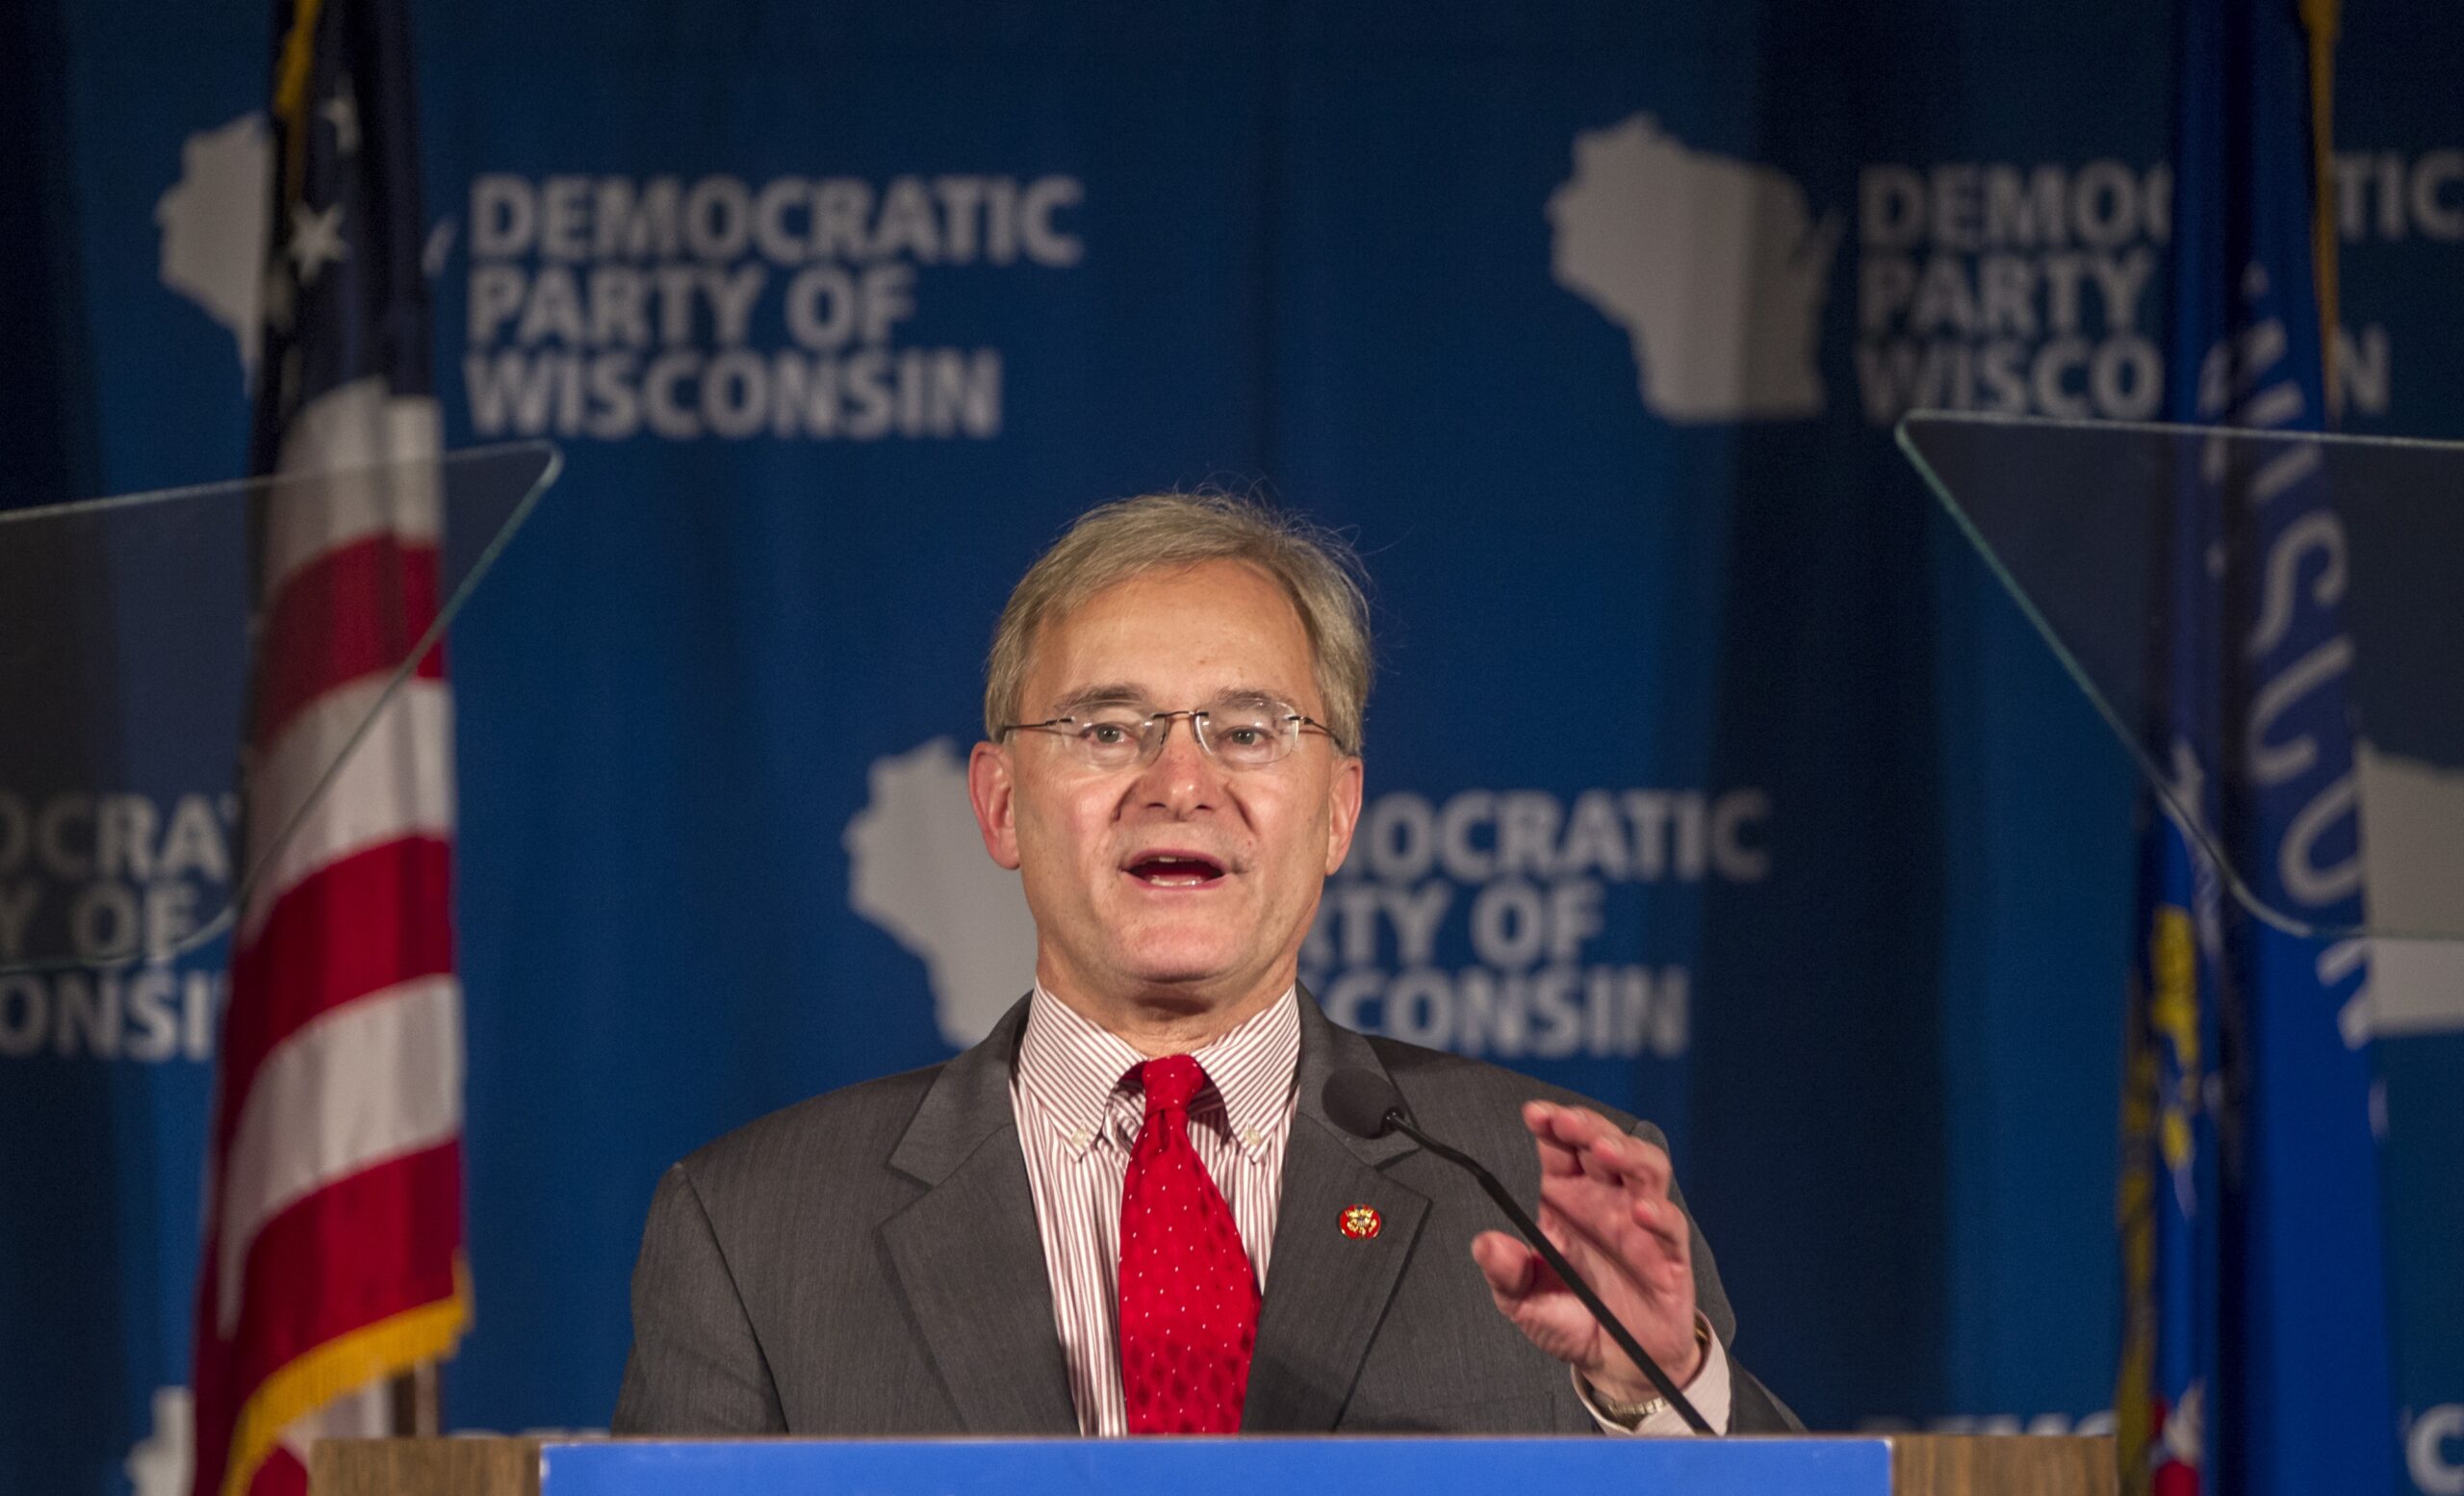 Democrat Peter Barca announces bid for Wisconsin’s 1st Congressional District